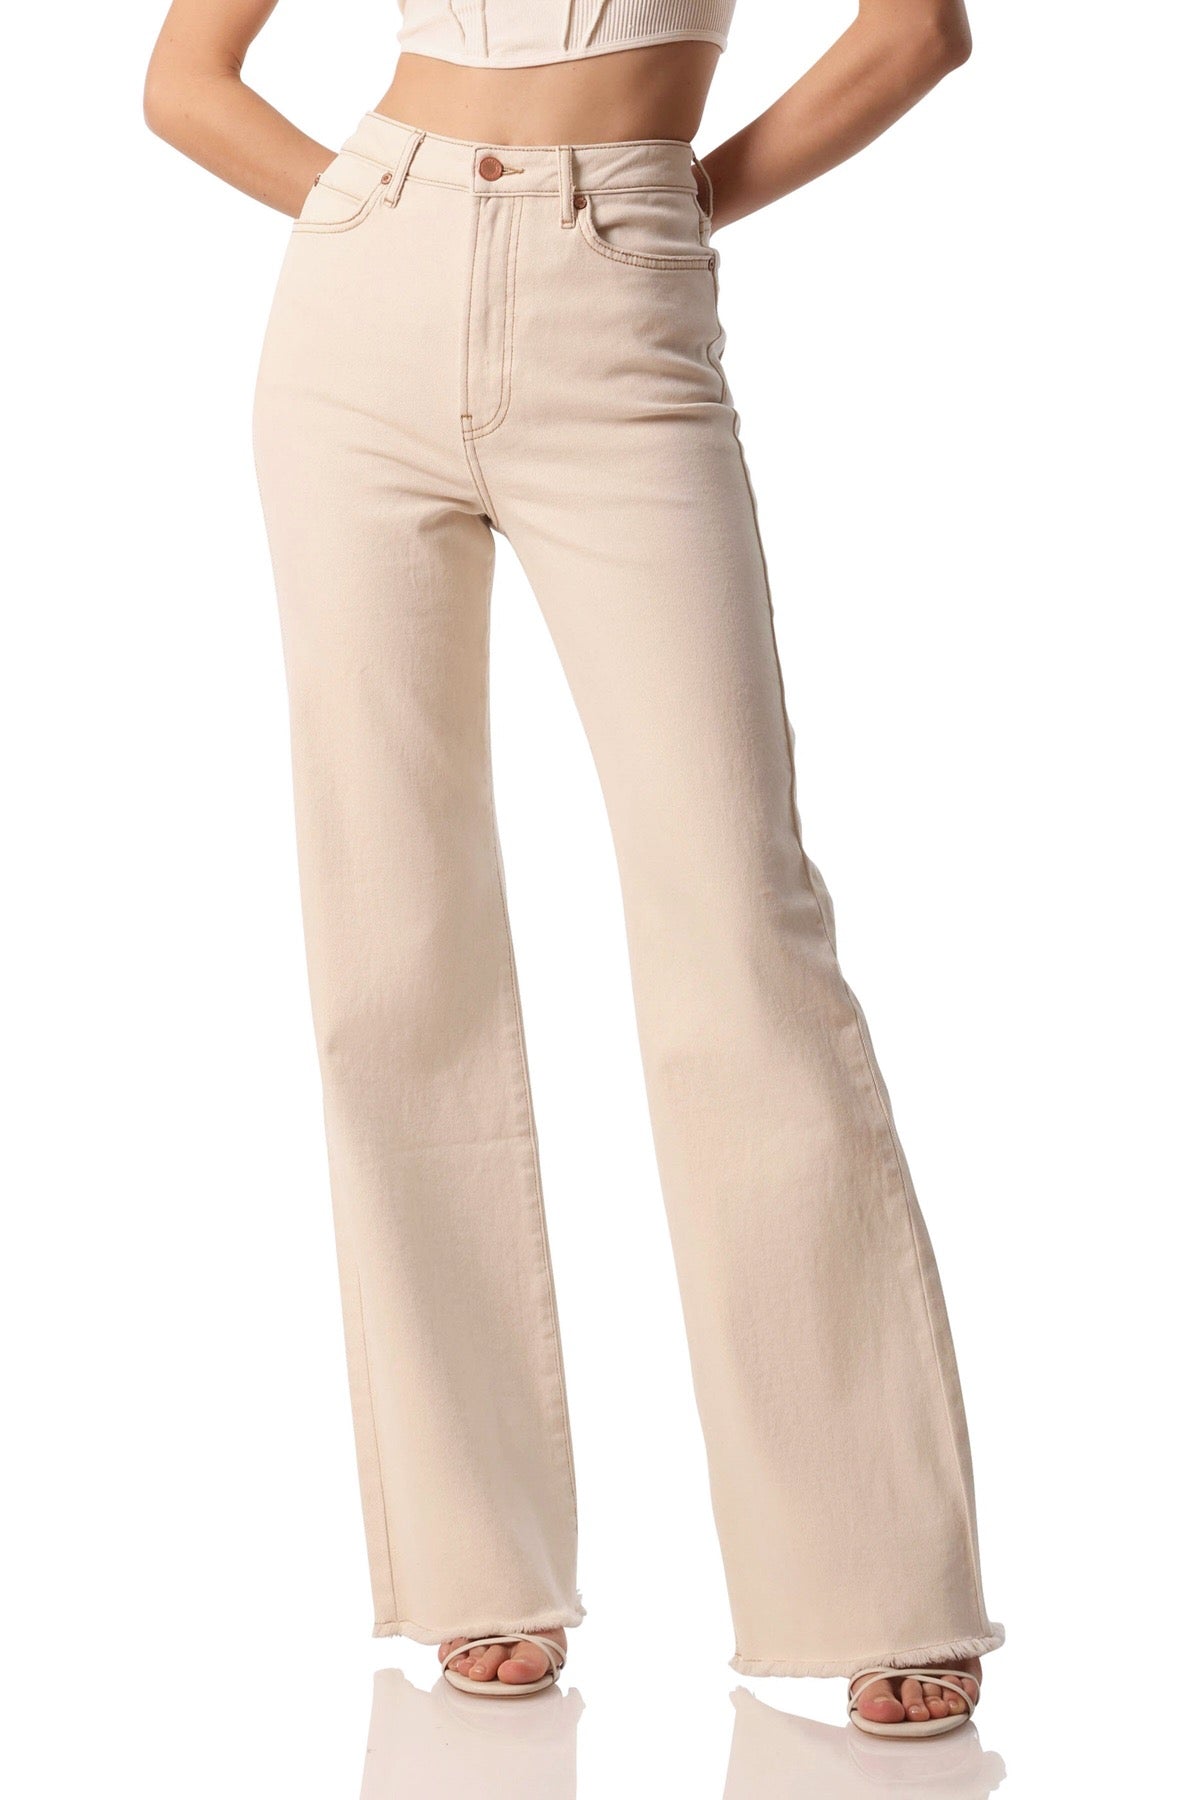 high rise stretch flare jeans ecru beige - flattering high-waisted fashion denim bottoms for women